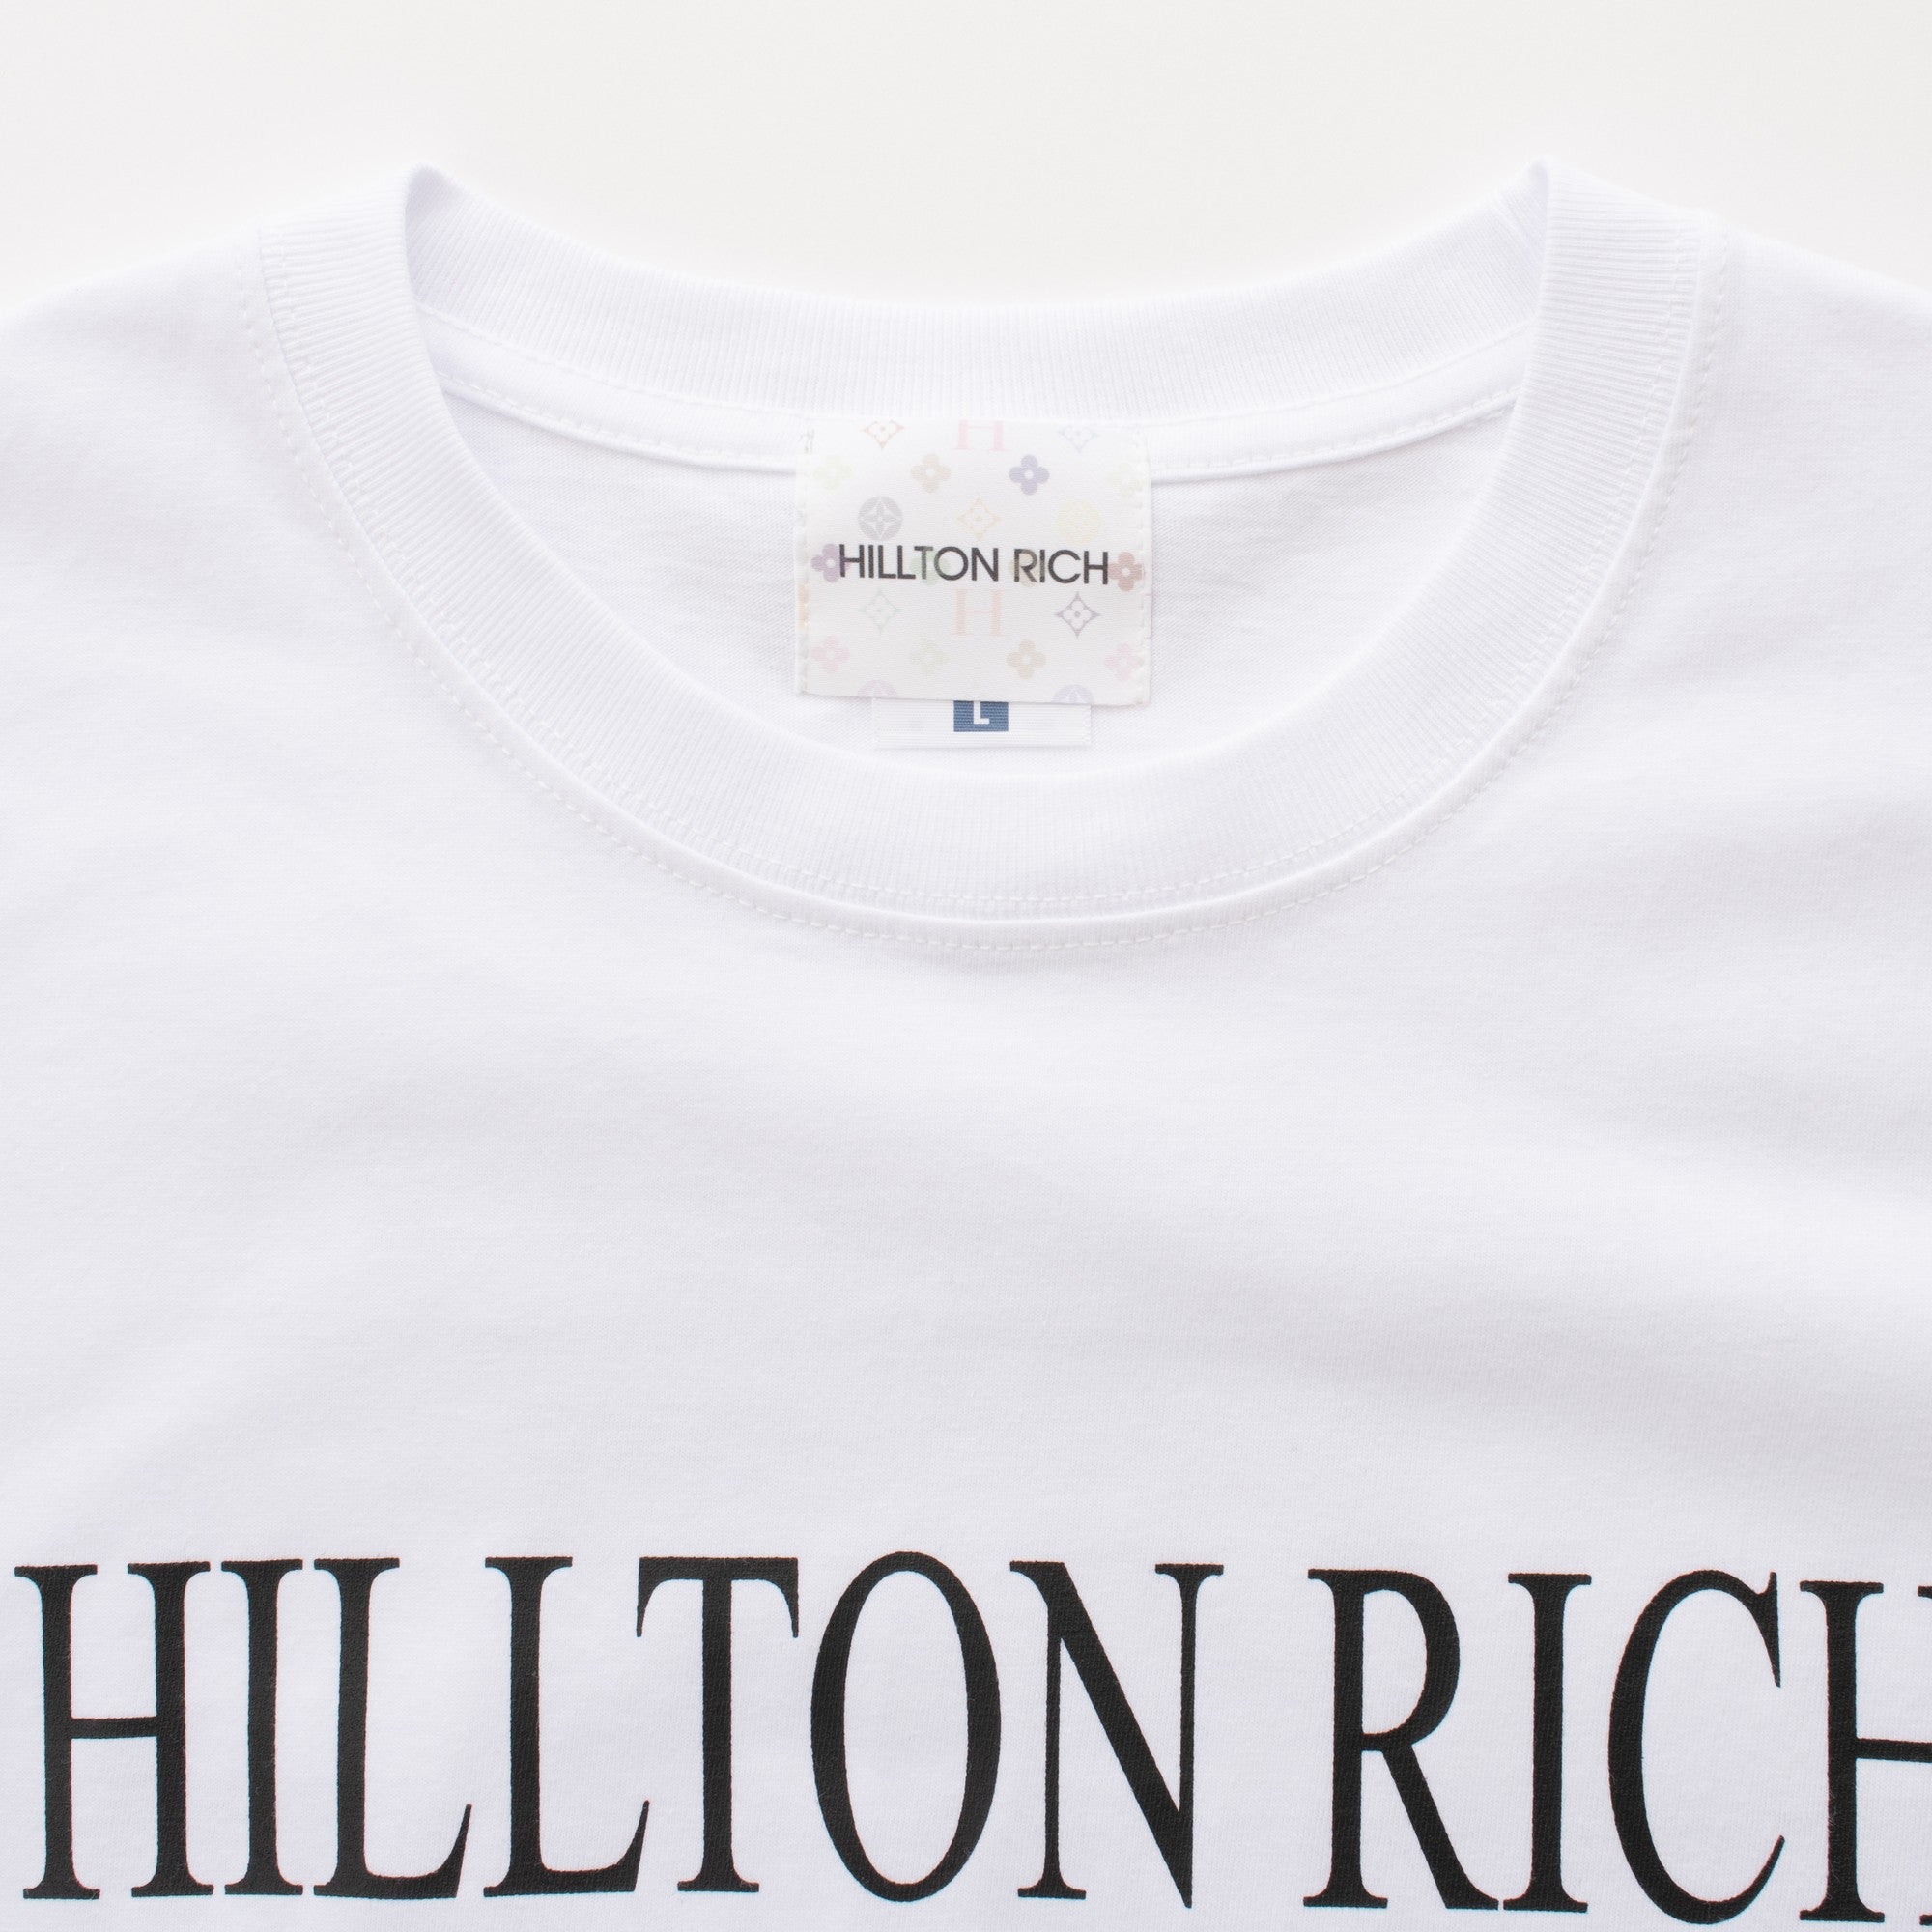 HILLTON RICH(ヒルトンリッチ）メンズ カットソー  BACK MESSAGE Tシャツ white ヒルトンリッチ